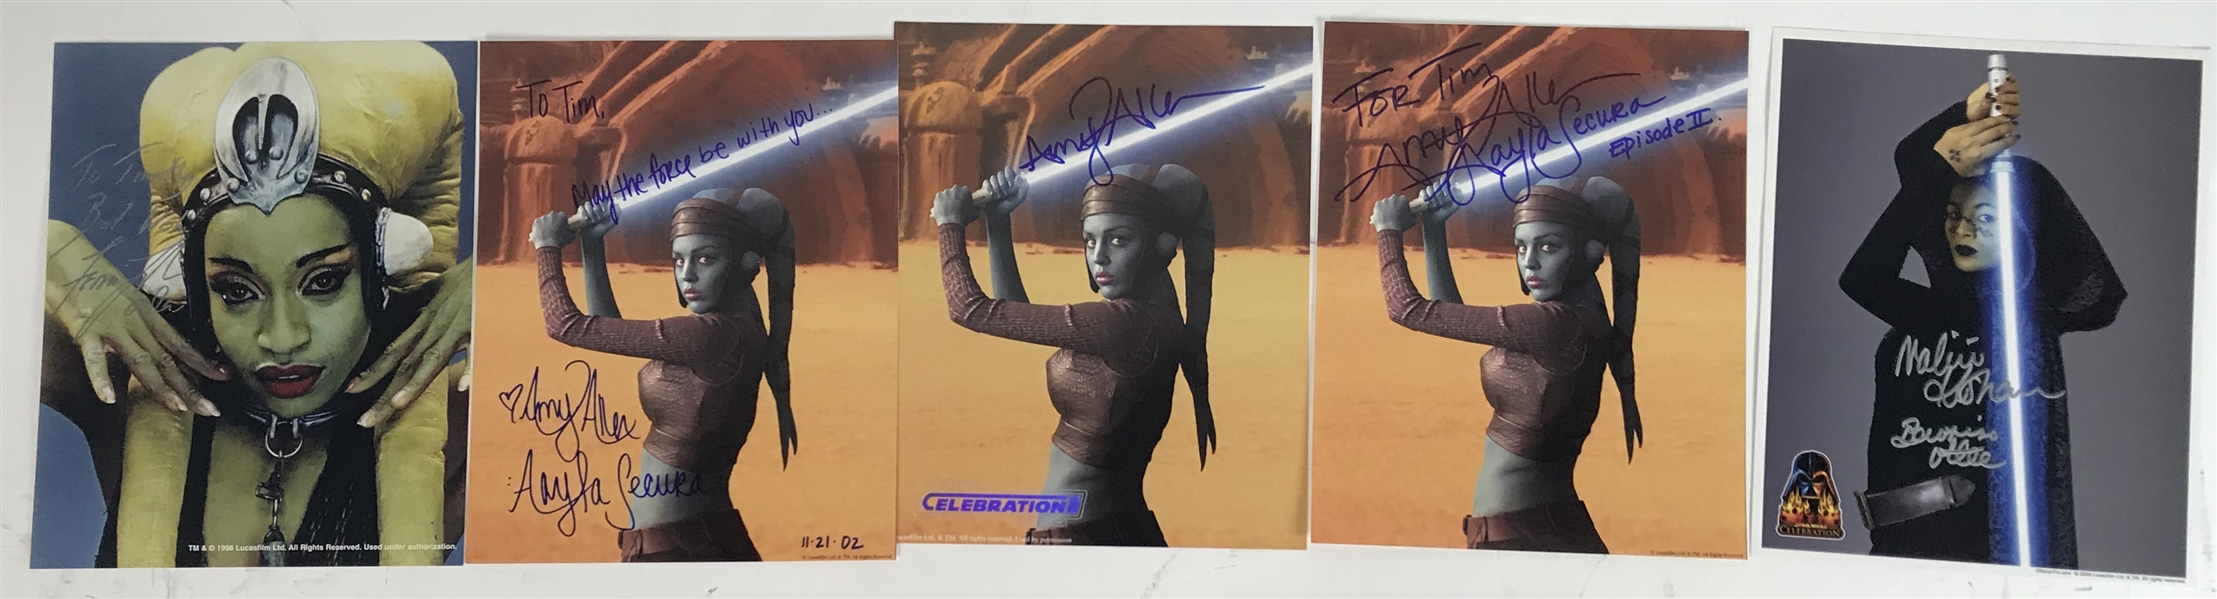 Women Of Star Wars Lot of Ten (10) Signed 8" x 10" Color Photographs (Beckett/BAS Guaranteed)